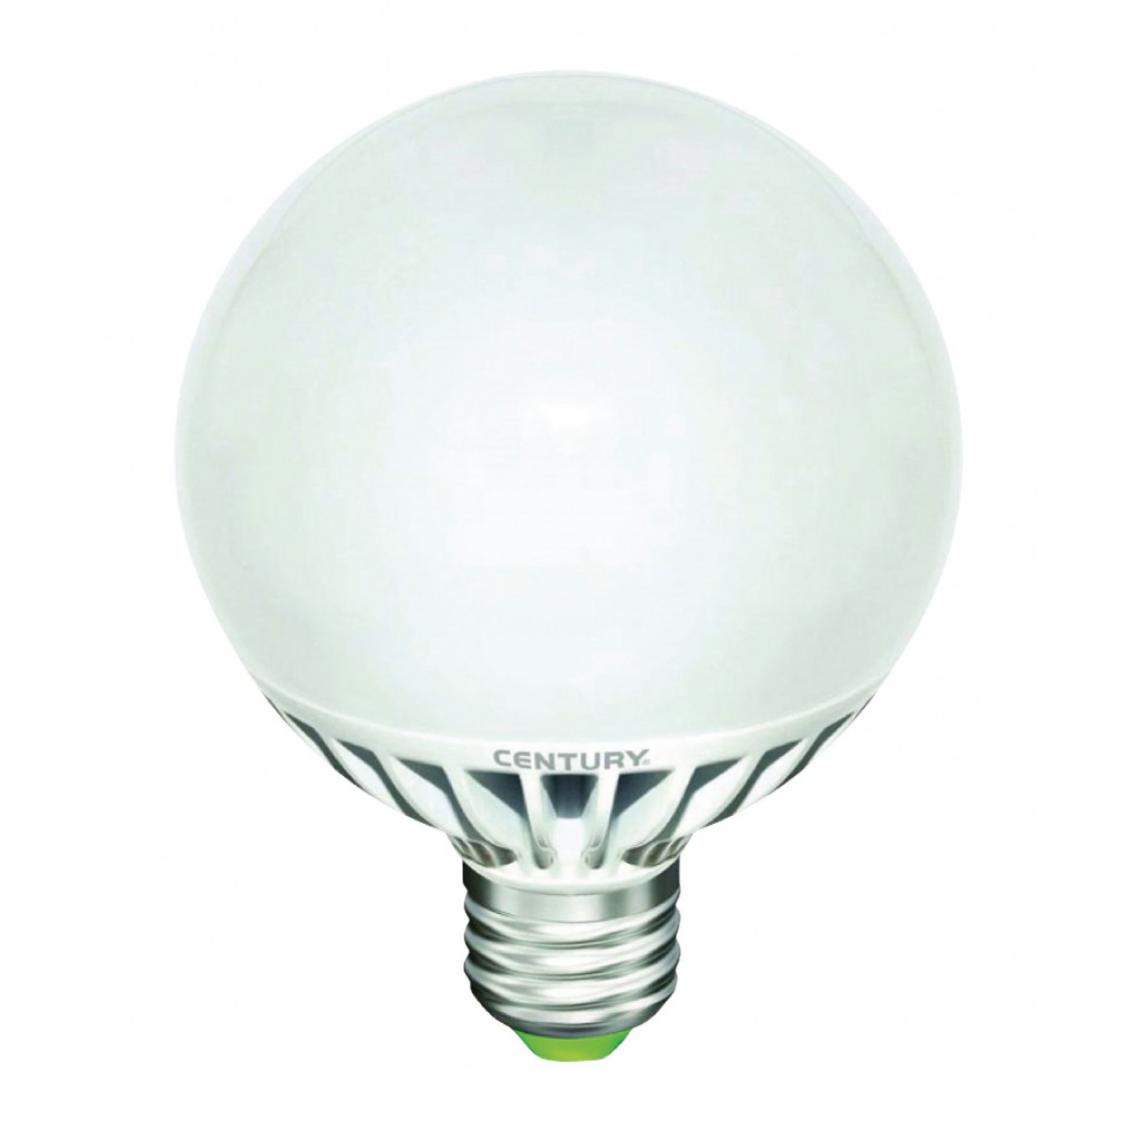 Alpexe - Ampoule LED E27 Globe 18 W 1710 lm 3000 K - Ampoules LED